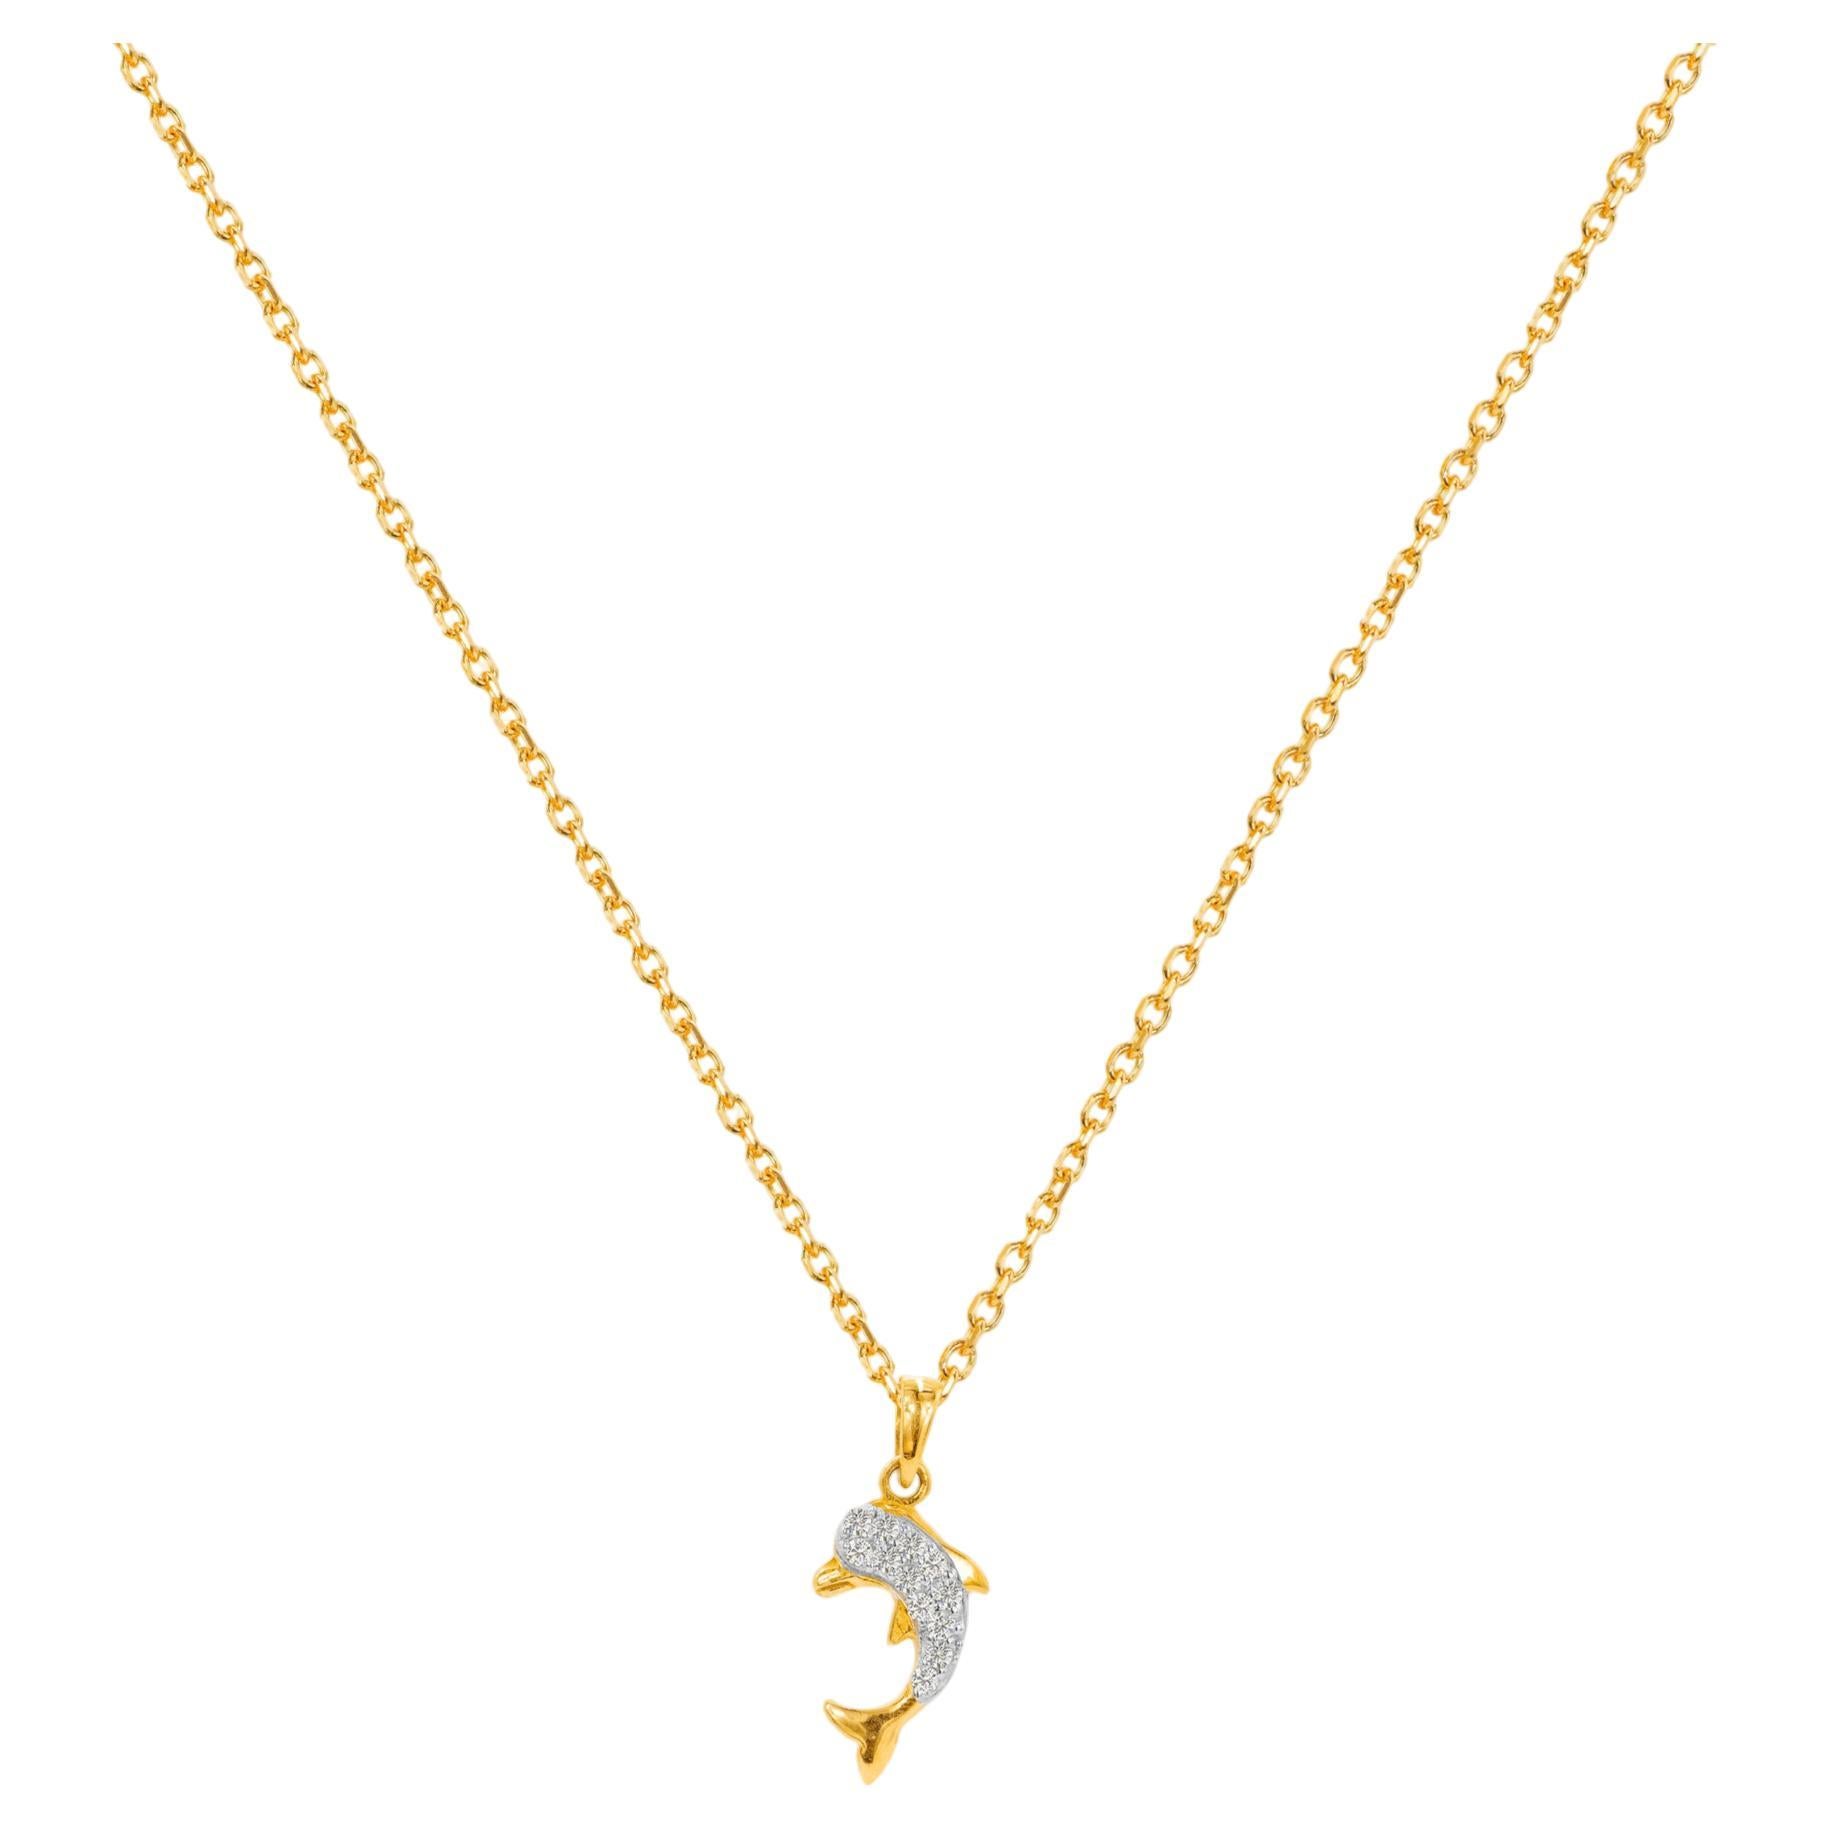 14k Gold Diamond Dolphin Necklace Sea Life Dainty Dolphin Charm